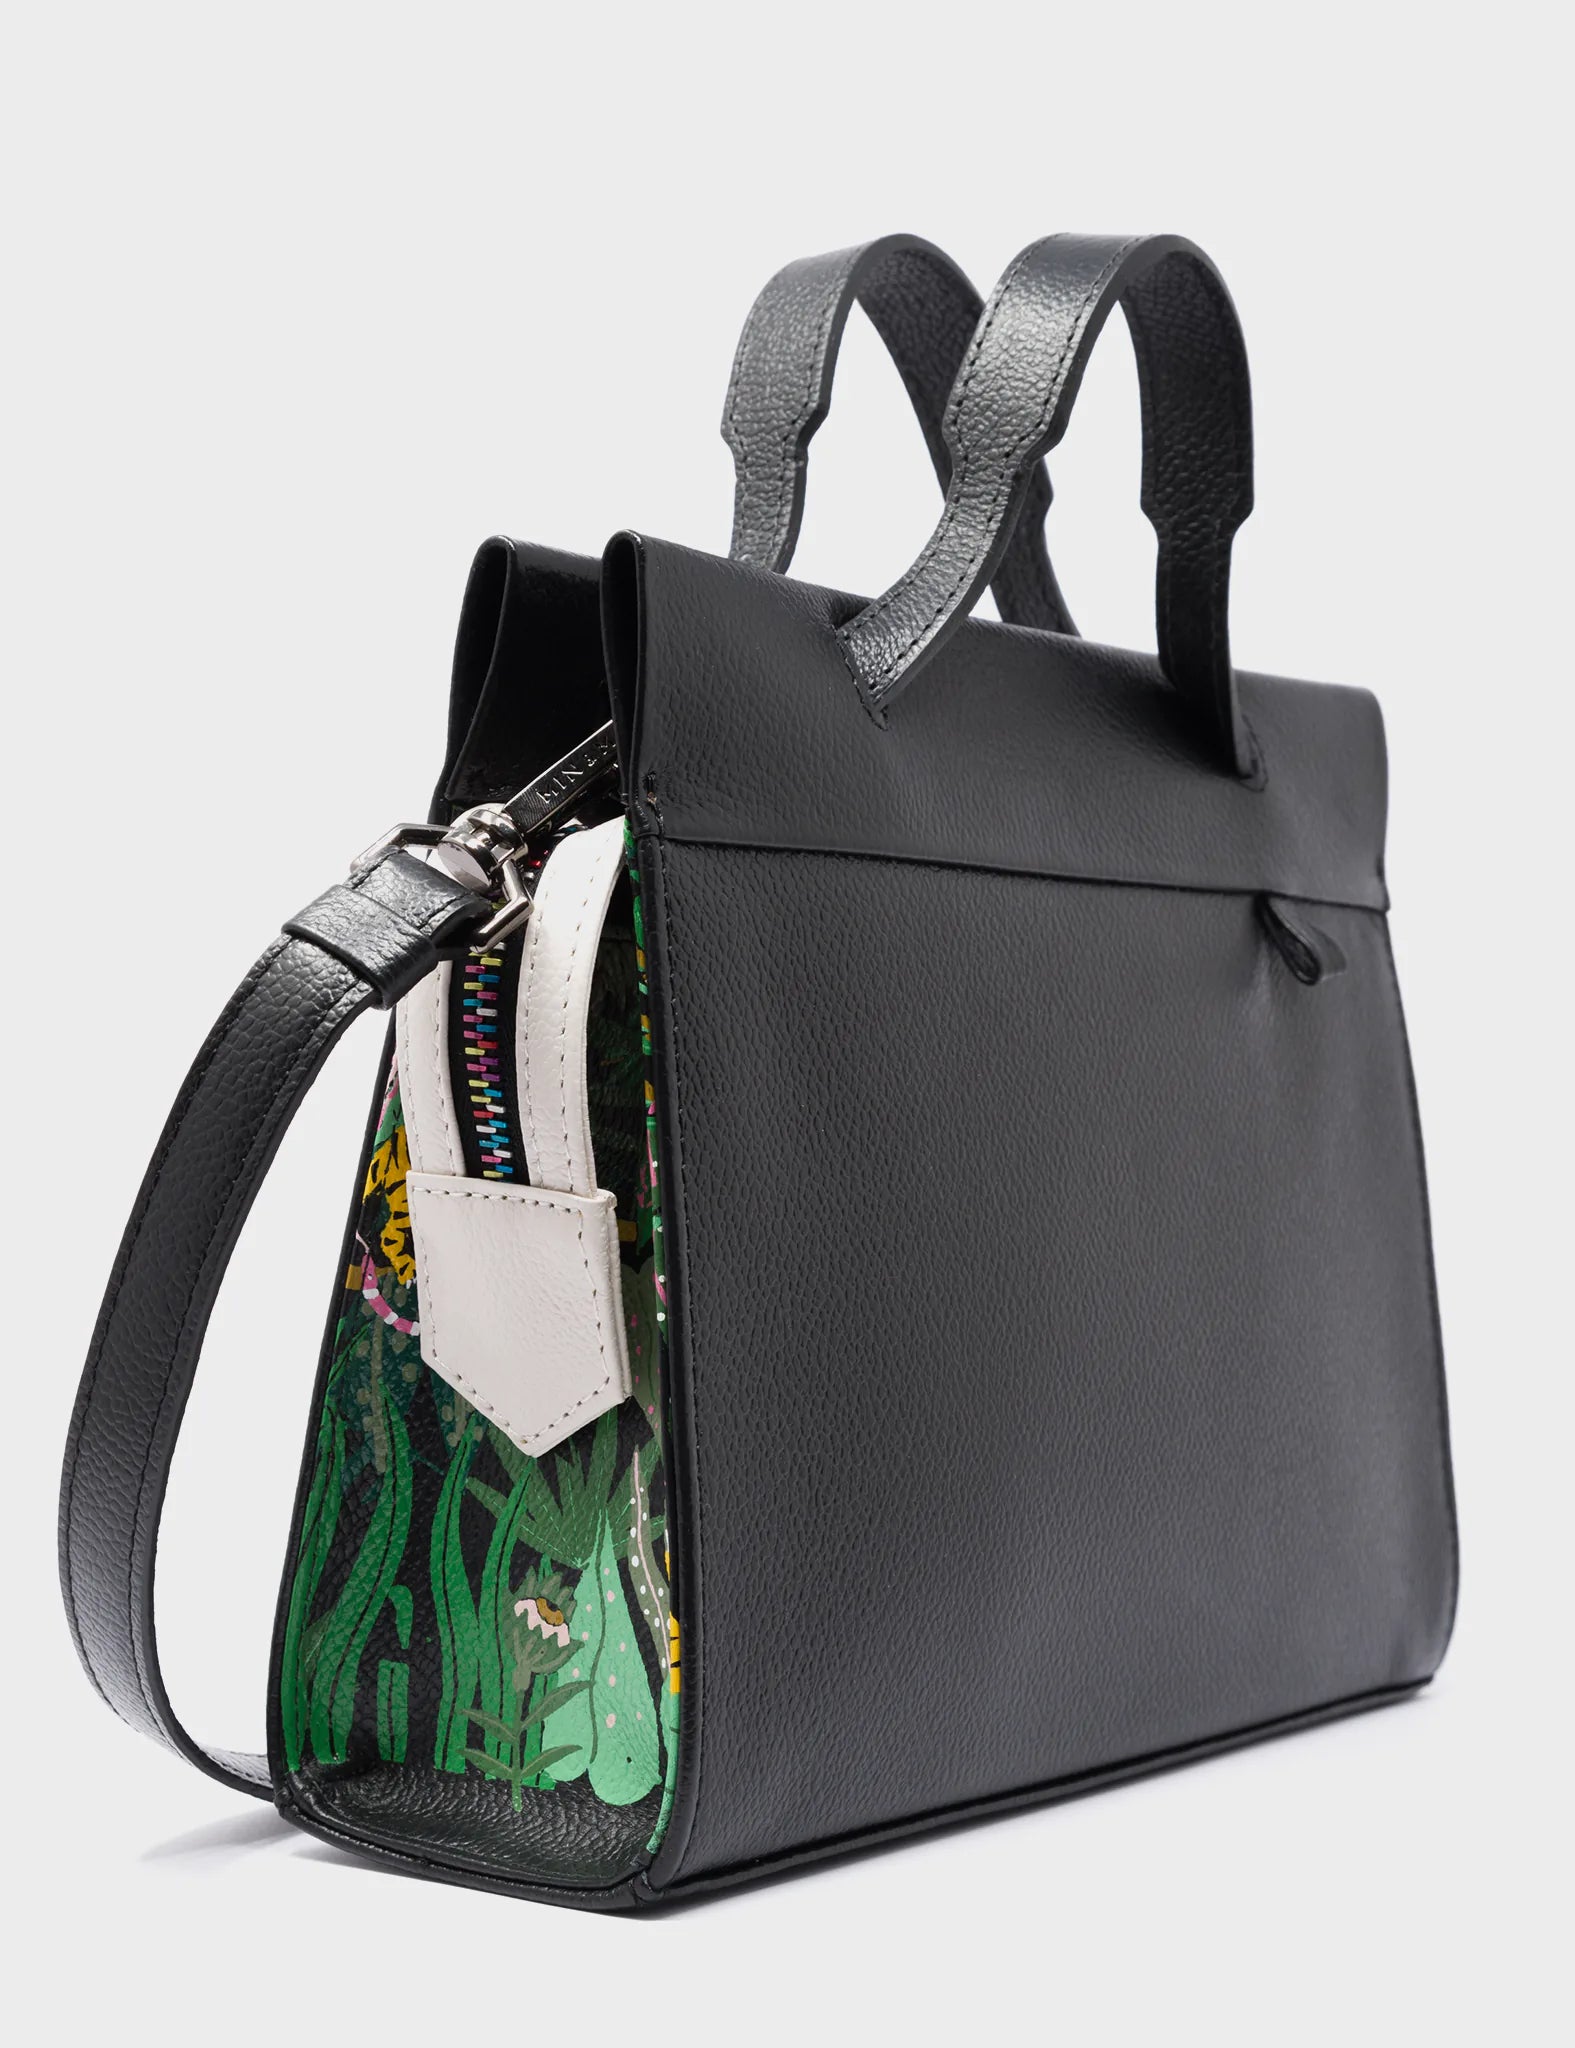 Vali Crossbody Small Black Leather Bag - El Tropico Print Design - Side